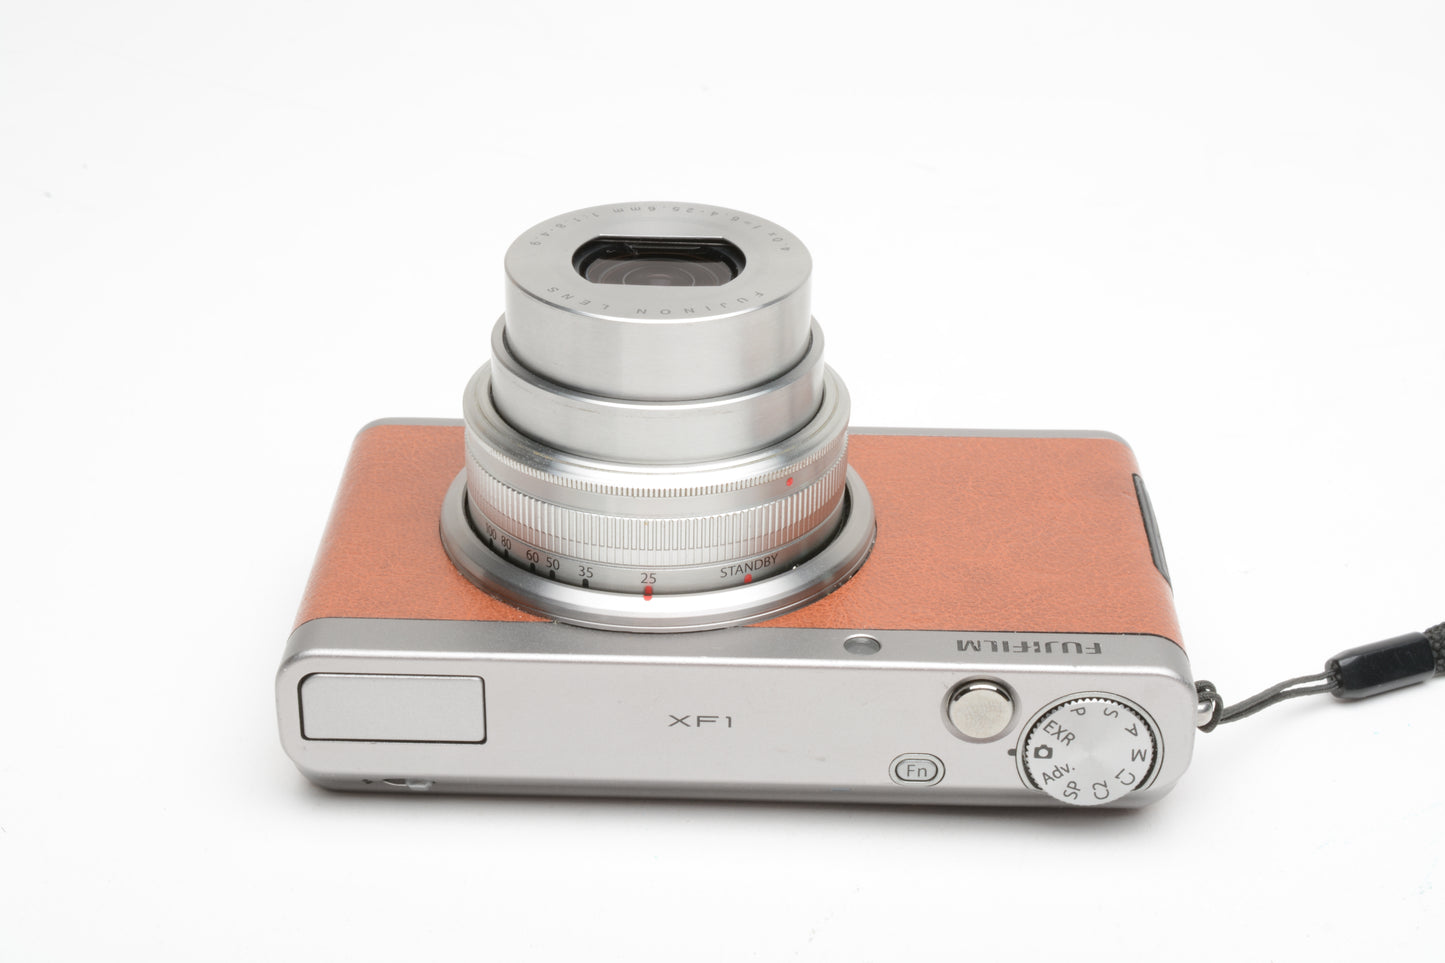 Fujifilm XF1 Digital Point&Shoot (Brown / Silver), batt+charger, tested, *Read